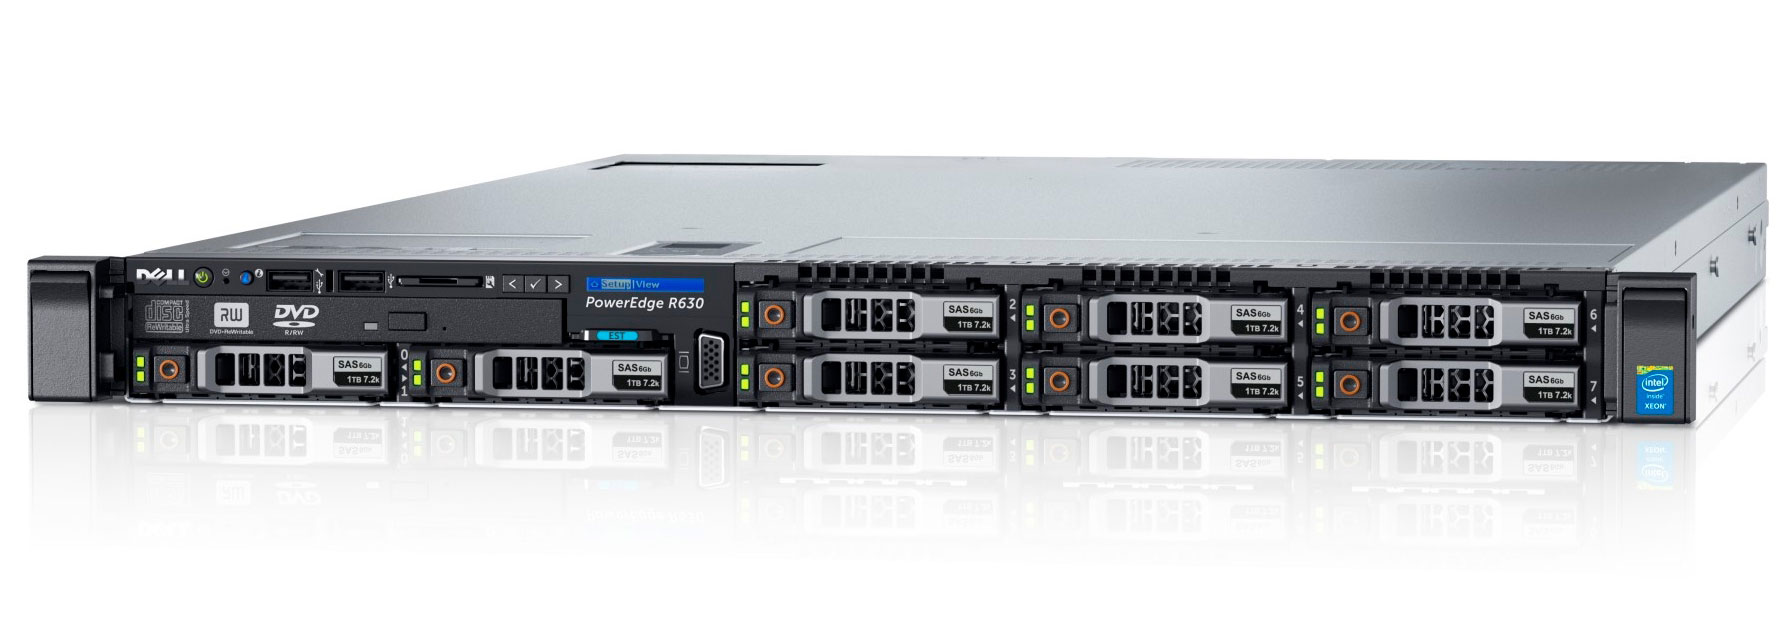 Подробное фото Сервер DELL PowerEdge R630 Xeon 2x E5-2670v3 192Gb DDR4 2133P 8x noHDD 2.5", SAS RAID Perc H730 mini, 1024Mb, DVD, 2*PSU